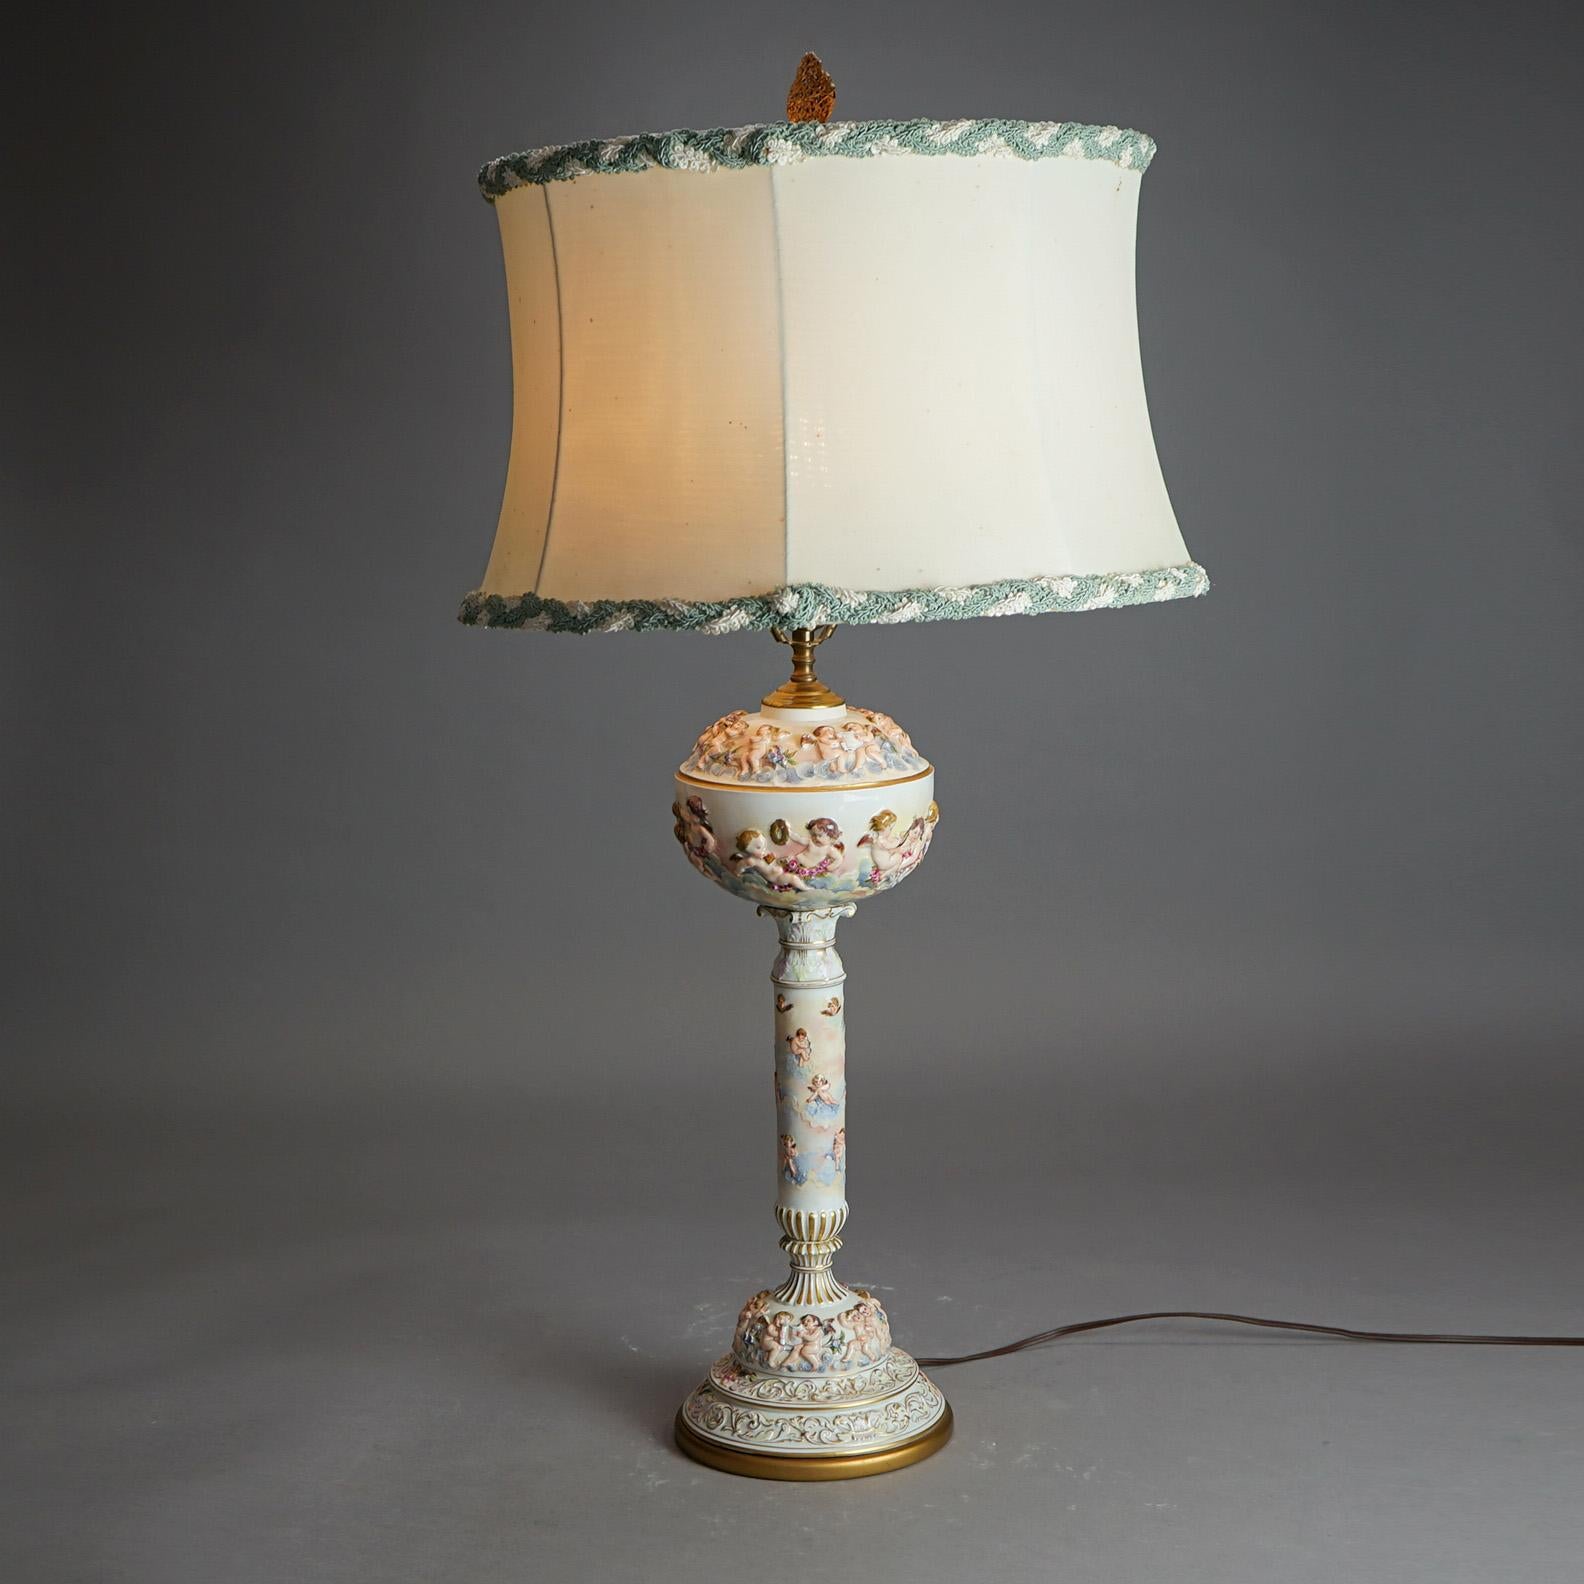 Antique Classical Italian Embossed Porcelain Cherub Table Lamp, Hand Painted & Gilt, c1920

Measures - 35.5